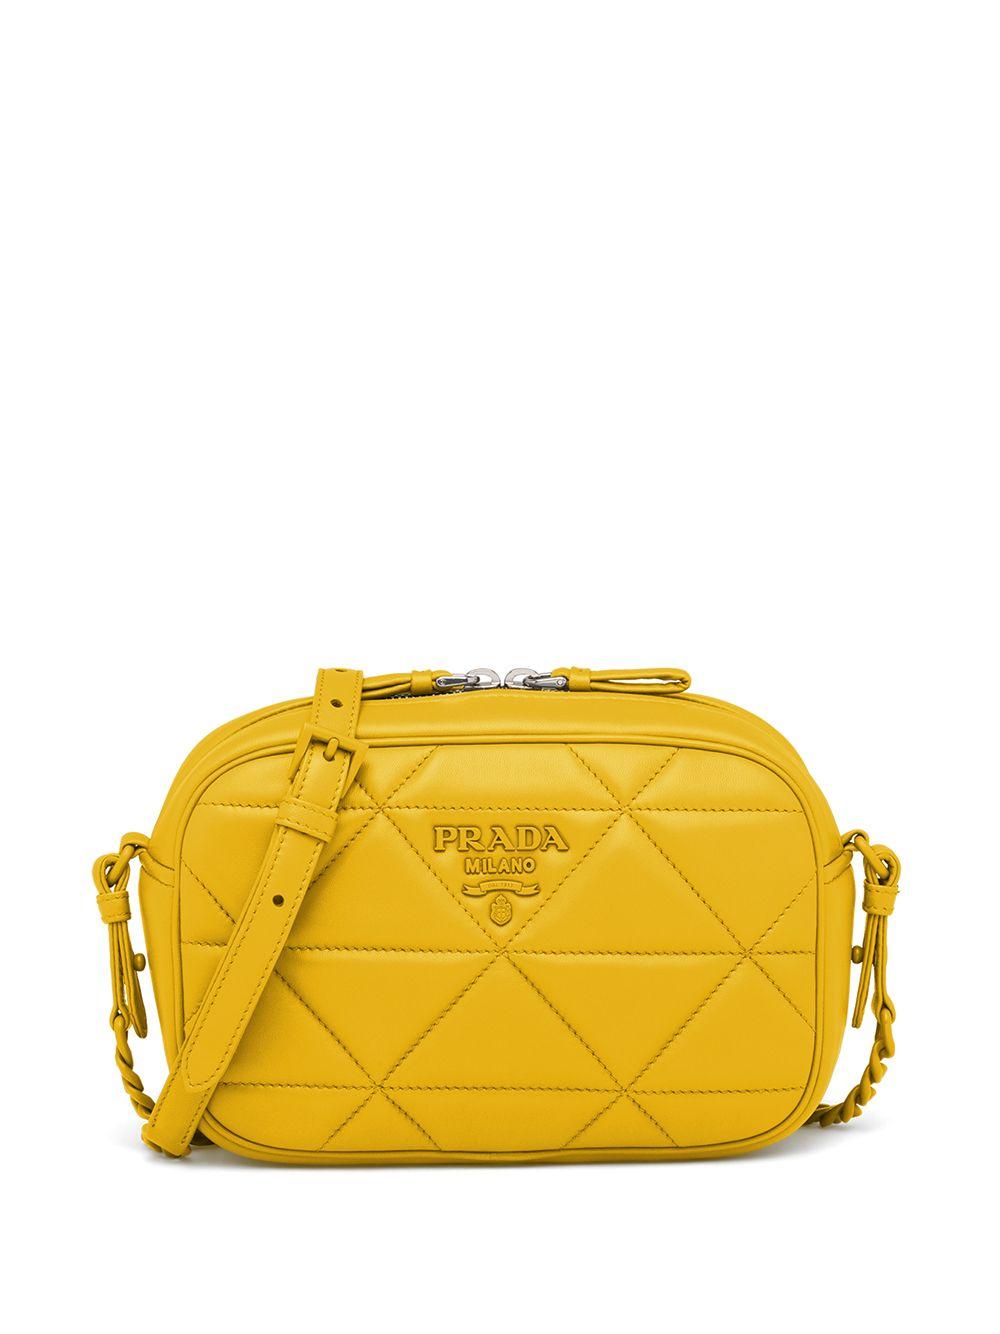 Prada Leather Spectrum Crossbody Bag in Yellow - Lyst